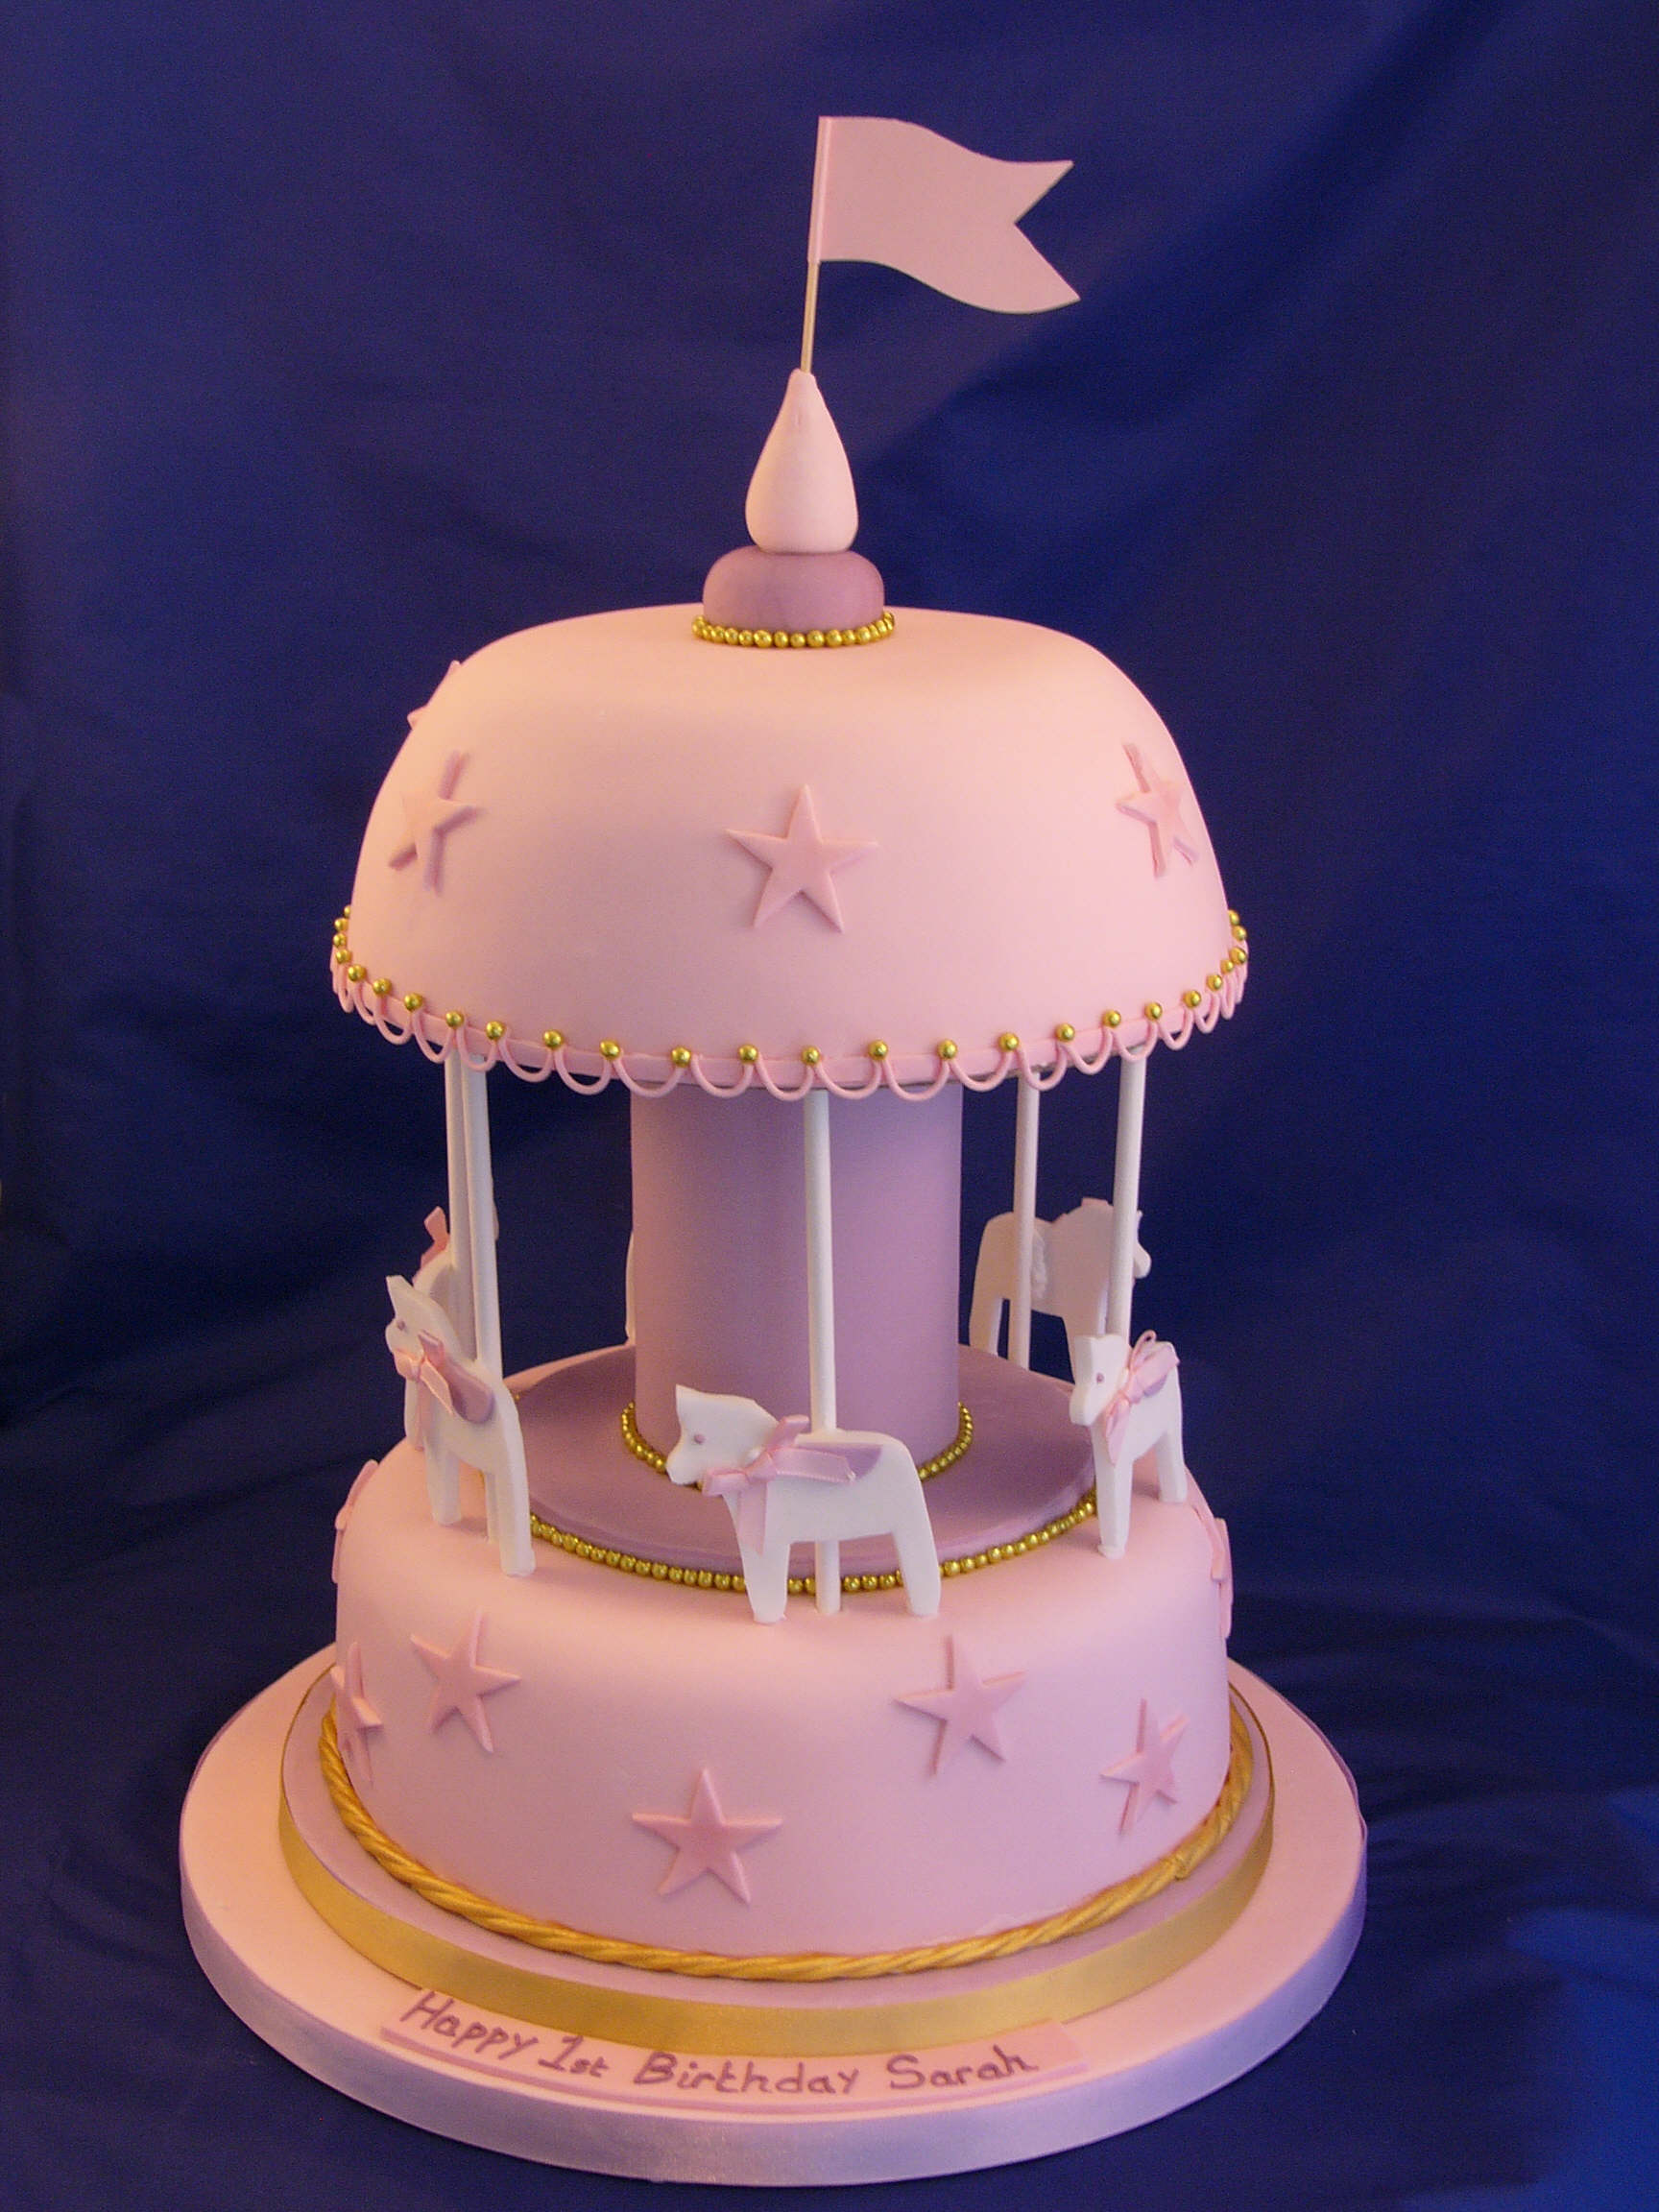 Carousel Cakes Decoration Ideas Little Birthday Cakes